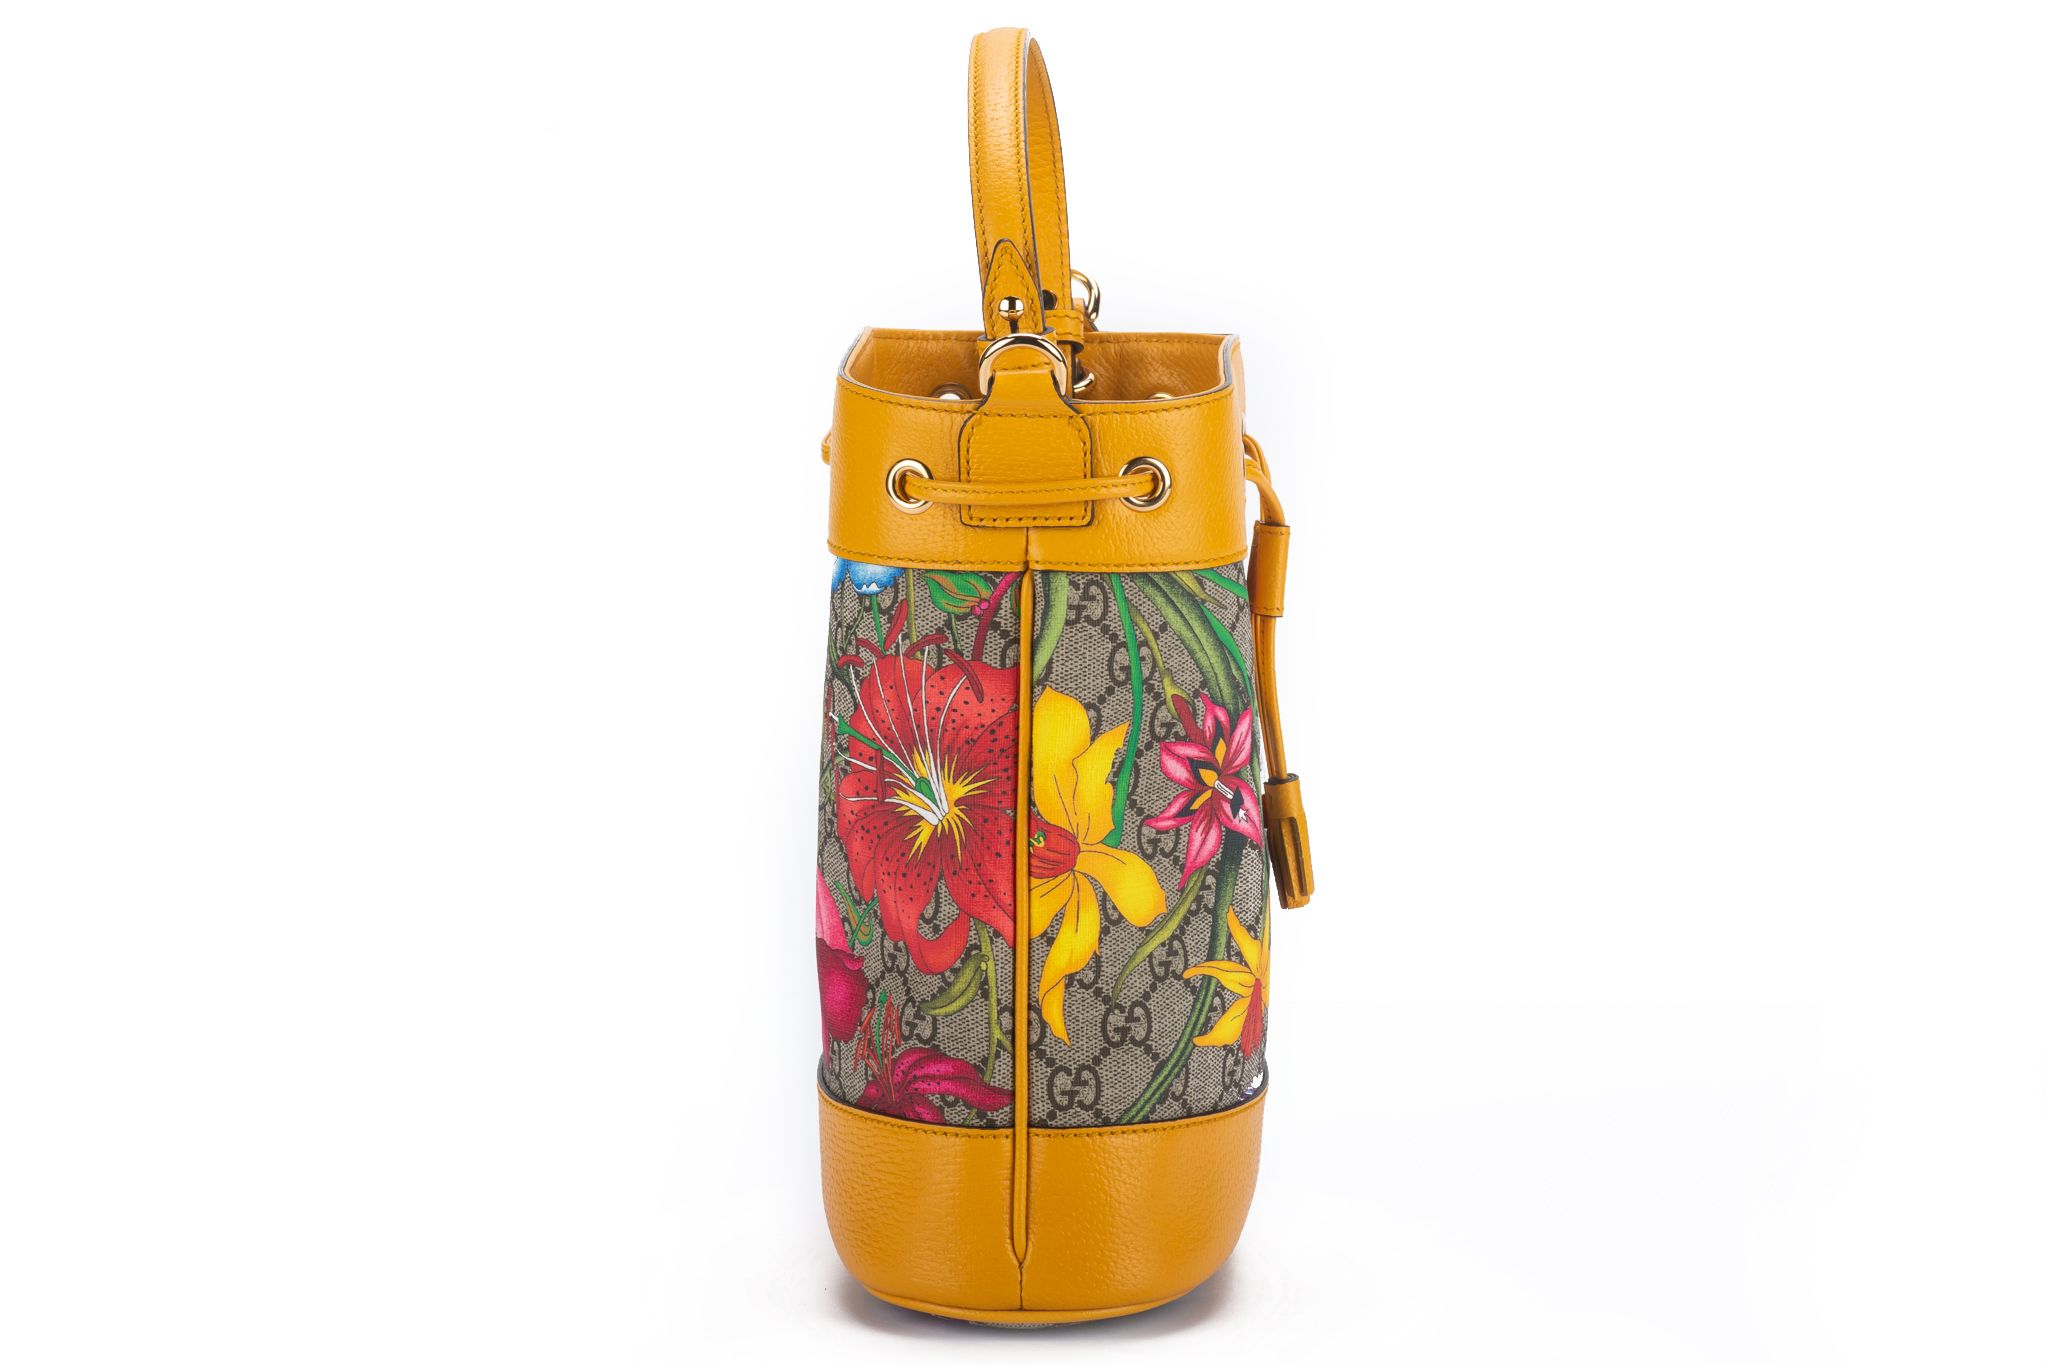 Gucci GG supreme monogram flora bucket bag with yellow leather